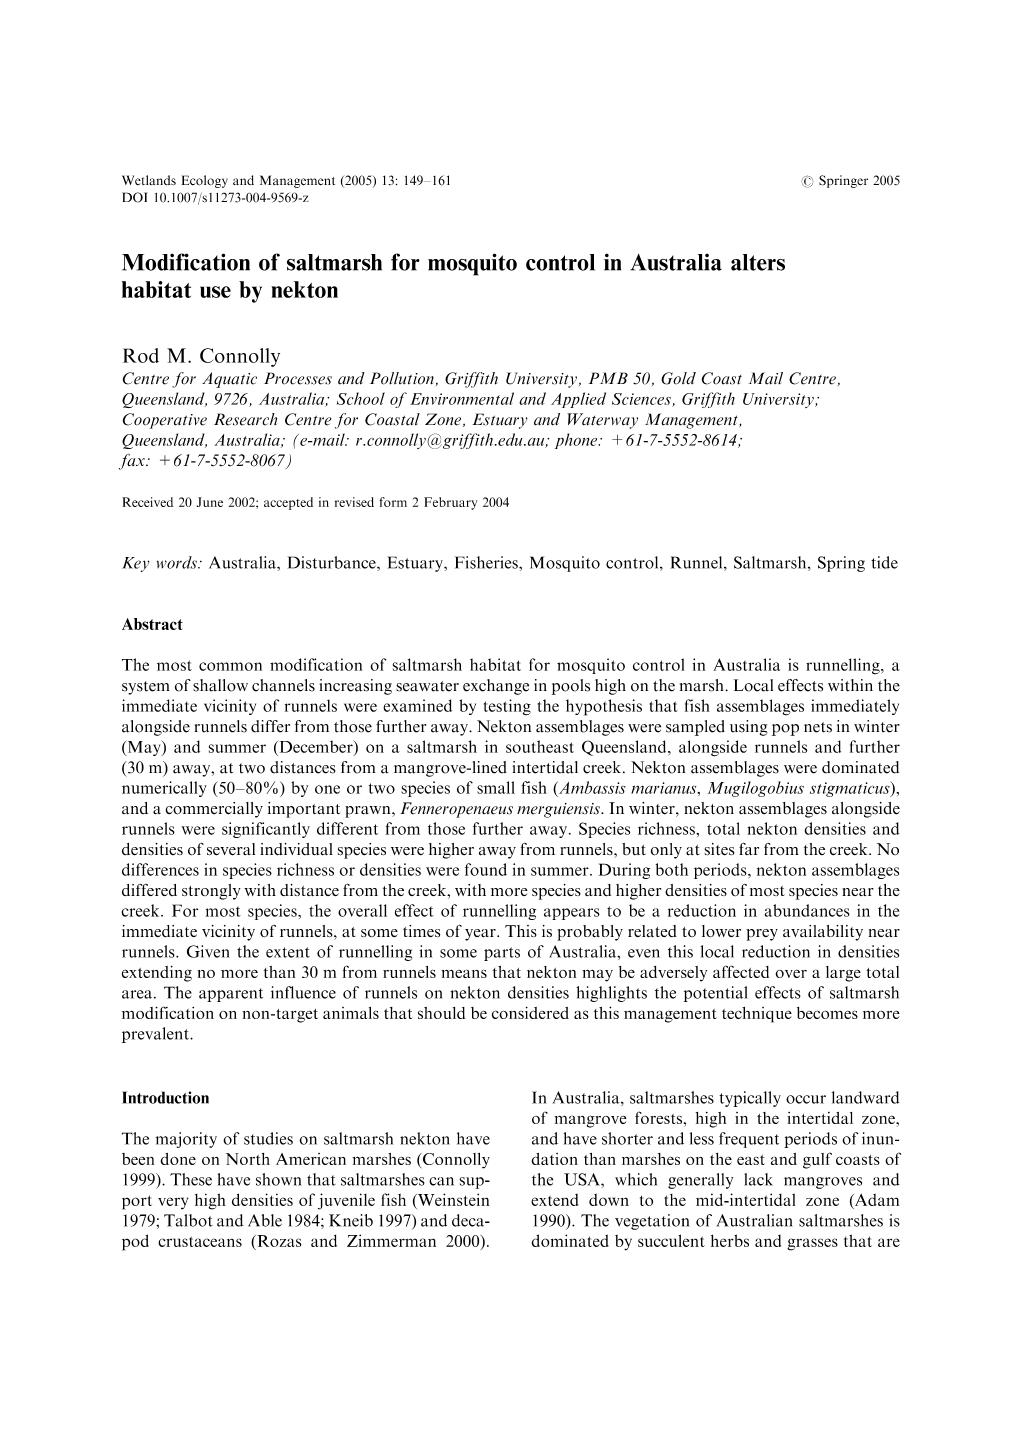 Modification of Saltmarsh for Mosquito Control in Australia Alters Habitat Use by Nekton